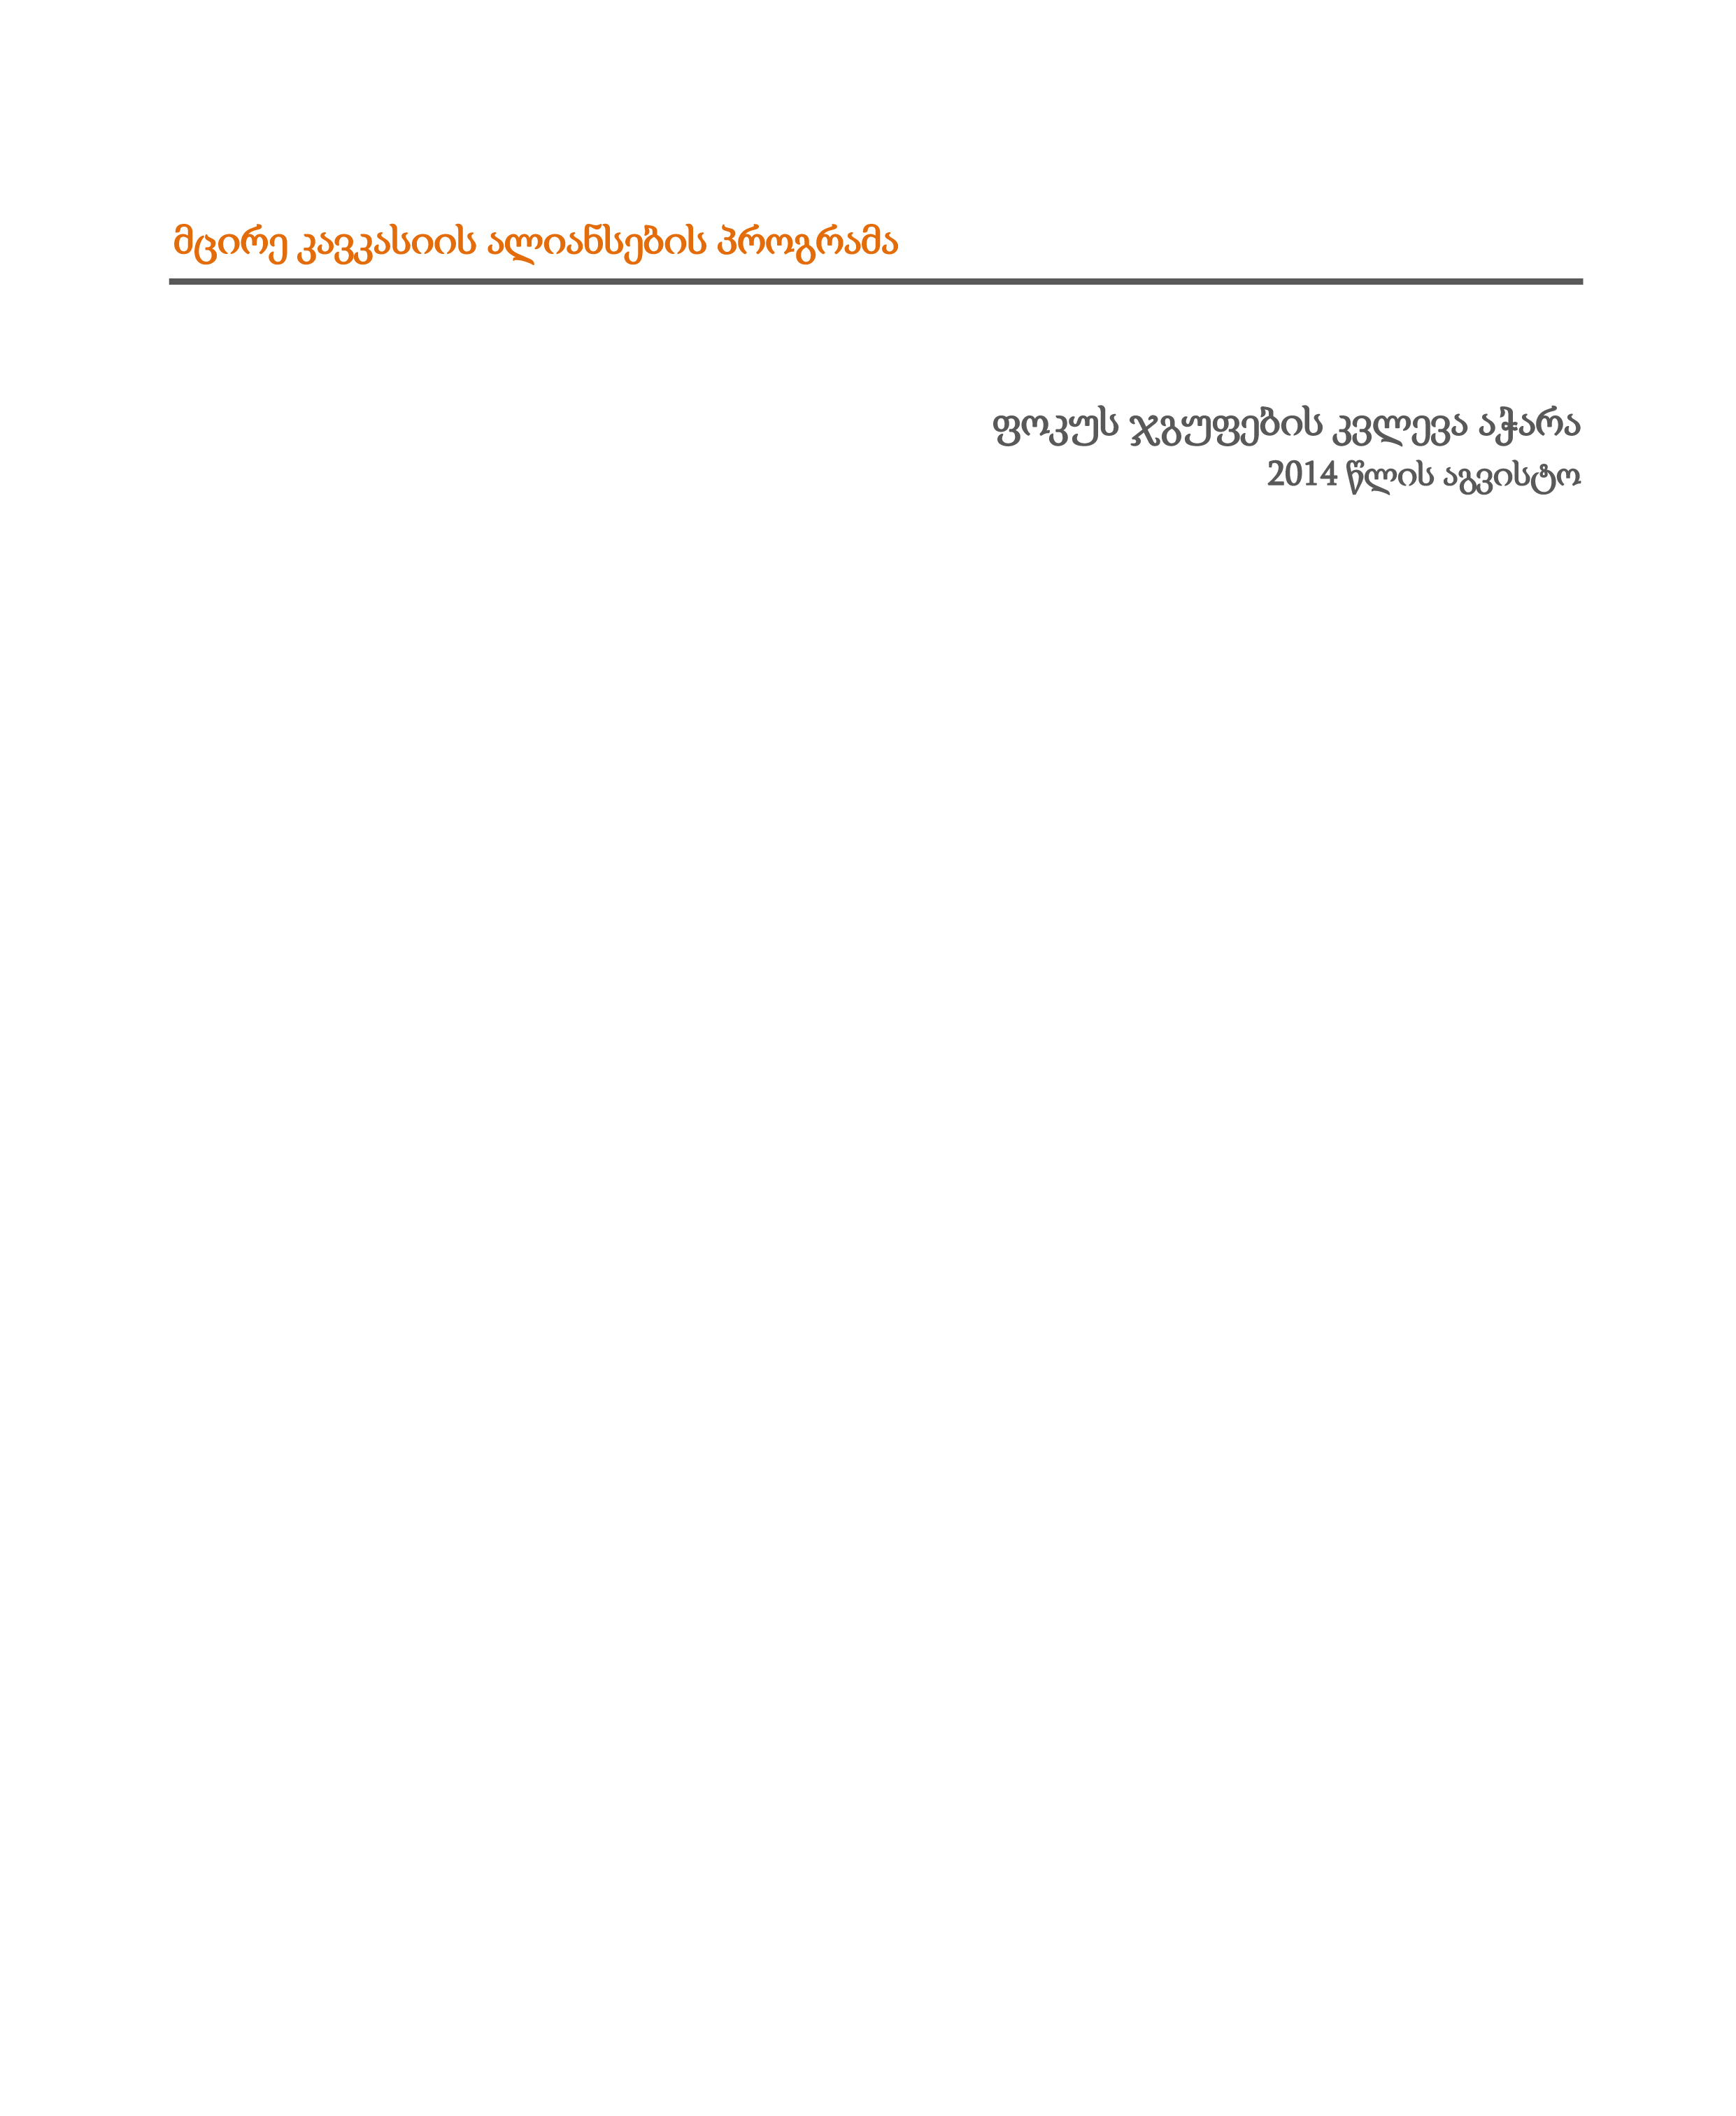 Focus Group Survey ALCP AJ 2014 - Georgian Version